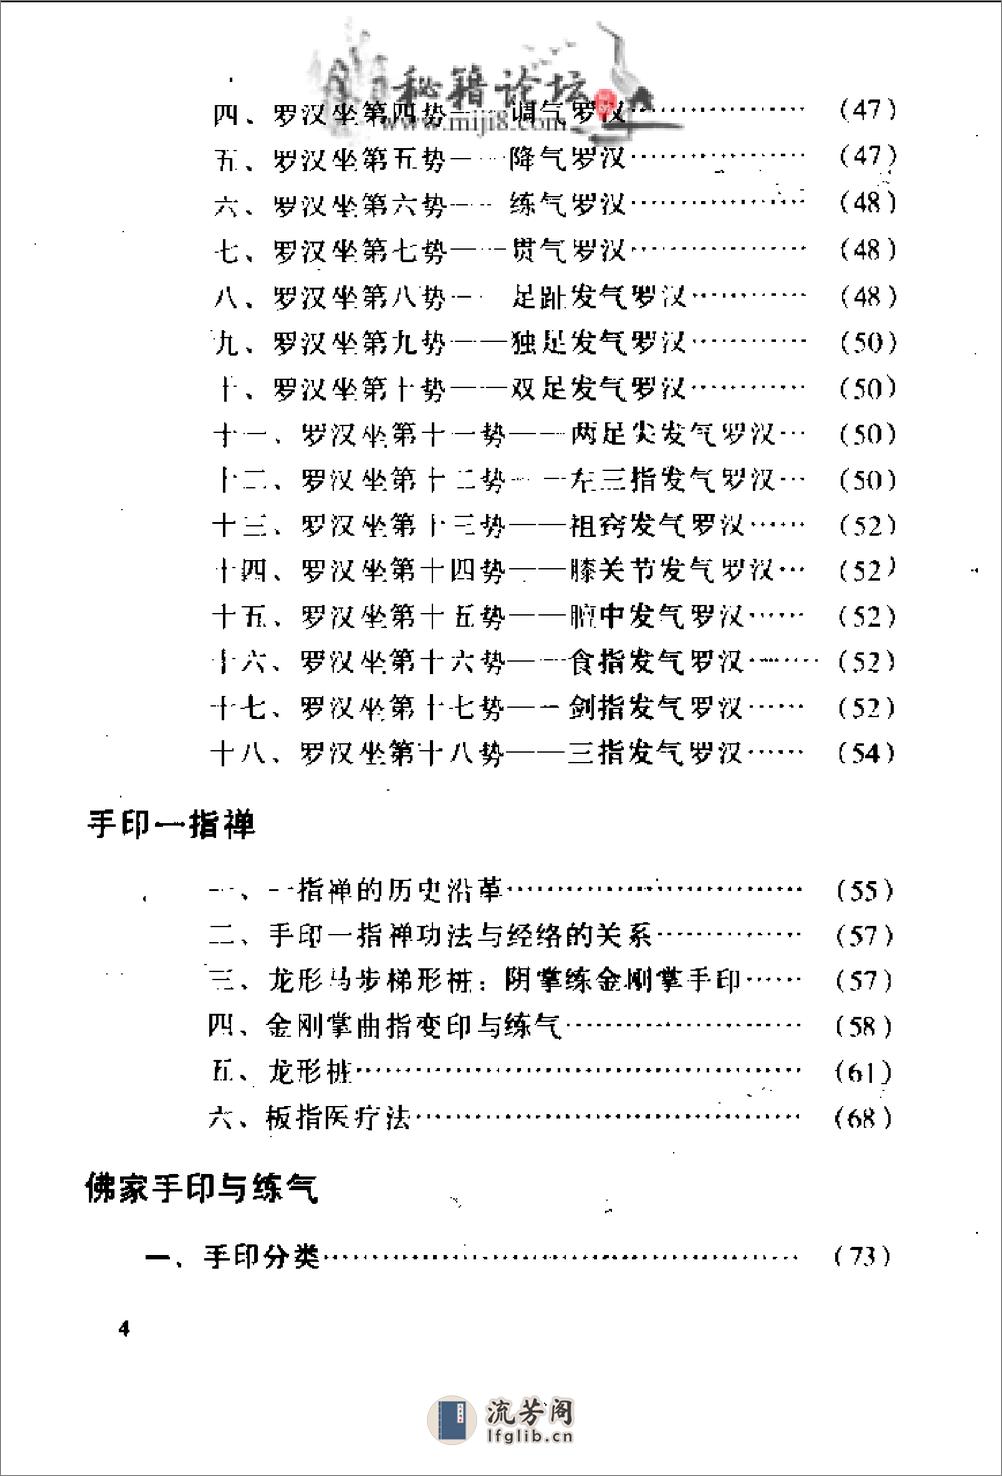 QM98内气外放功(1) - 第4页预览图